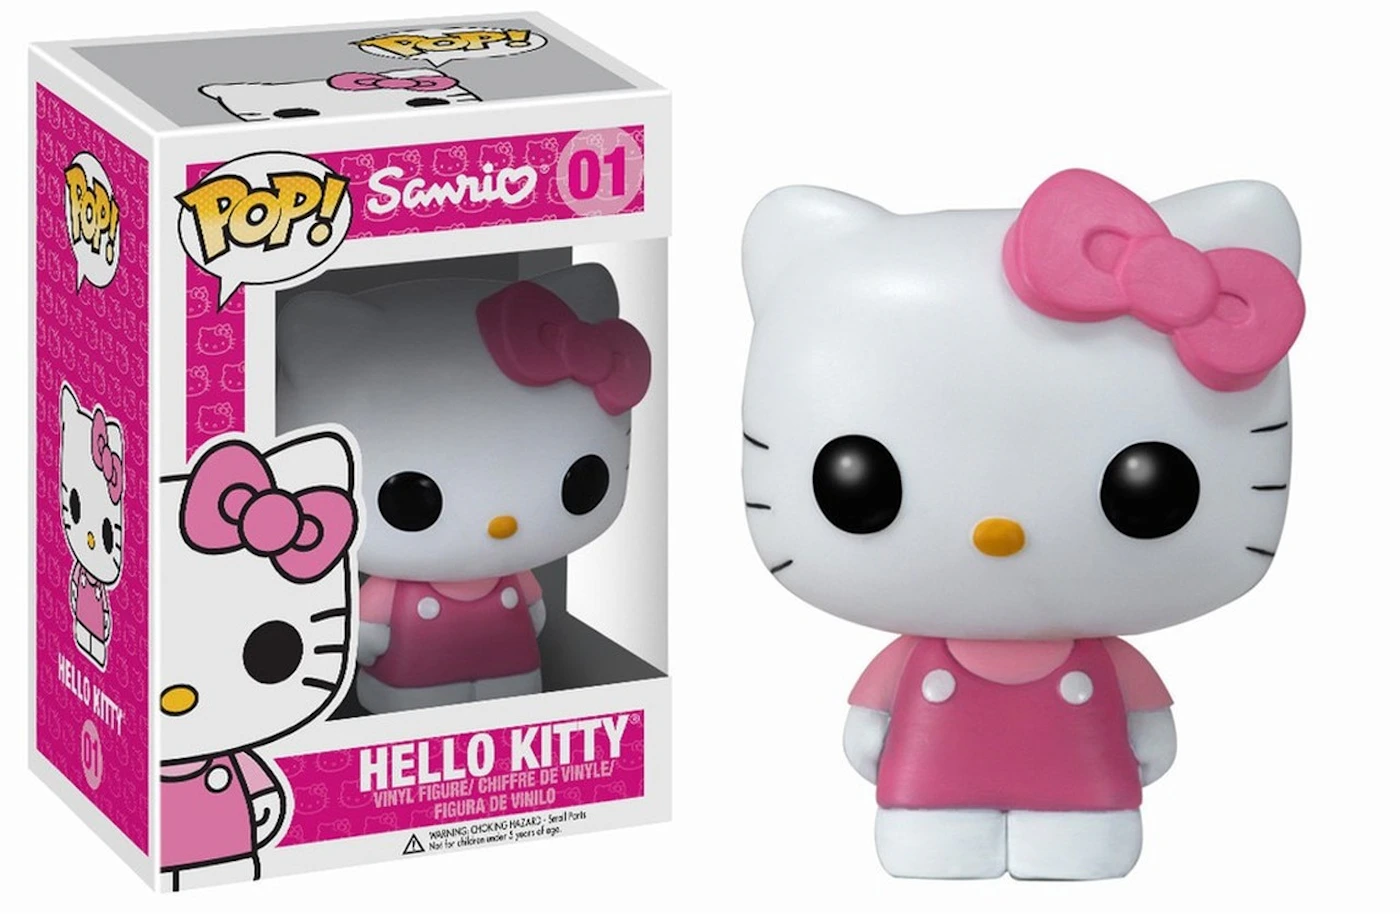 FUNKO Pop! Sanrio Hello Kitty Vinyl Figure 